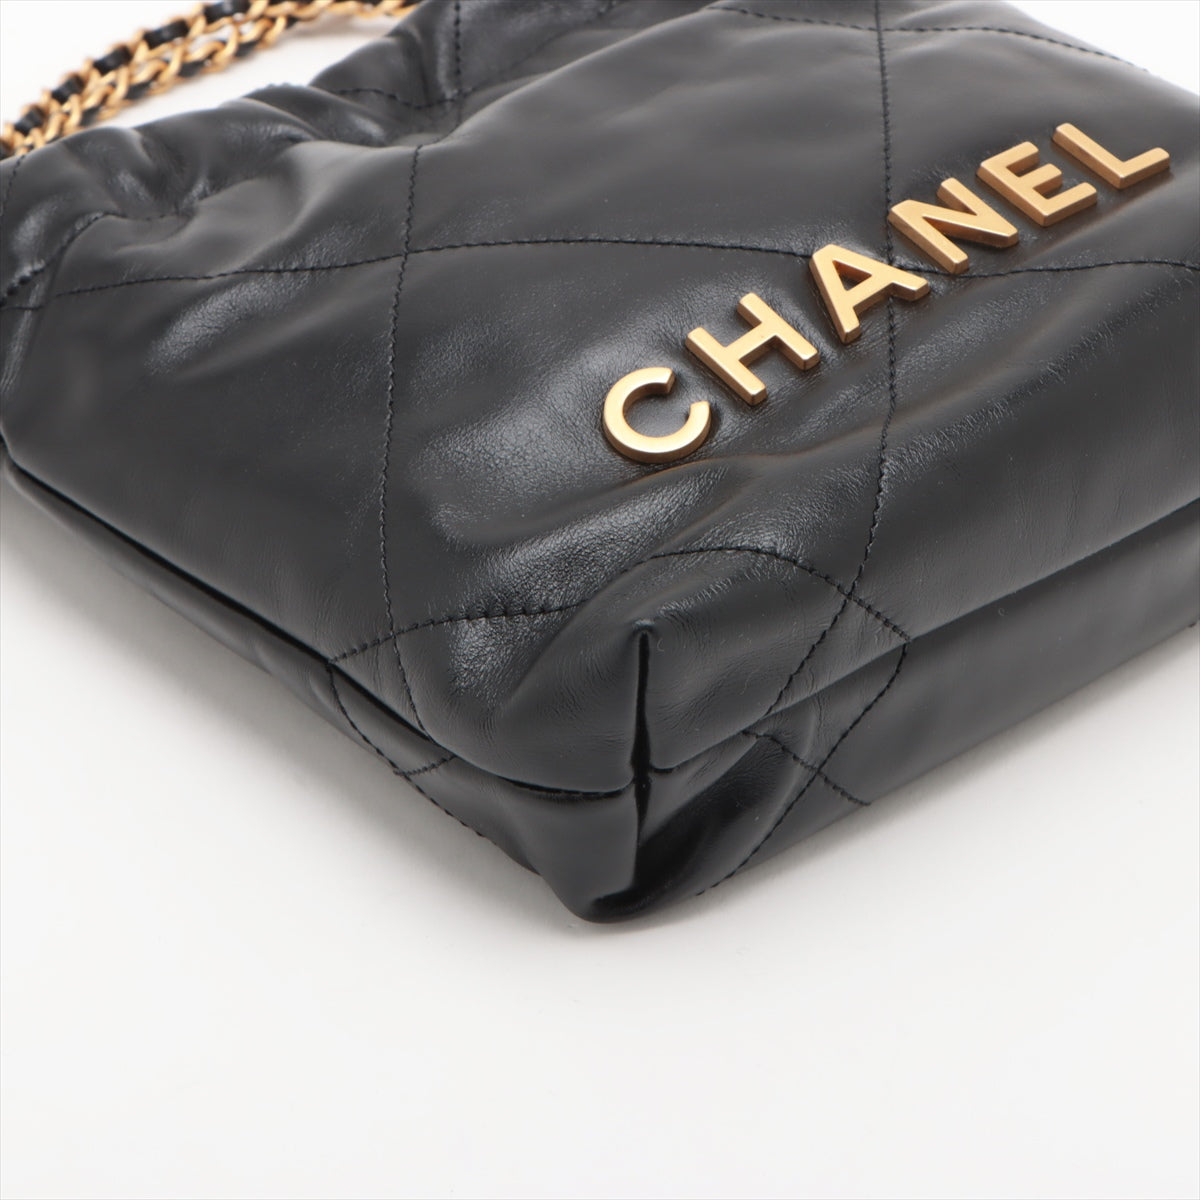 Chanel Chanel 22 mini shiny calfskin 2way shoulder bag Black Gold Metal fittings